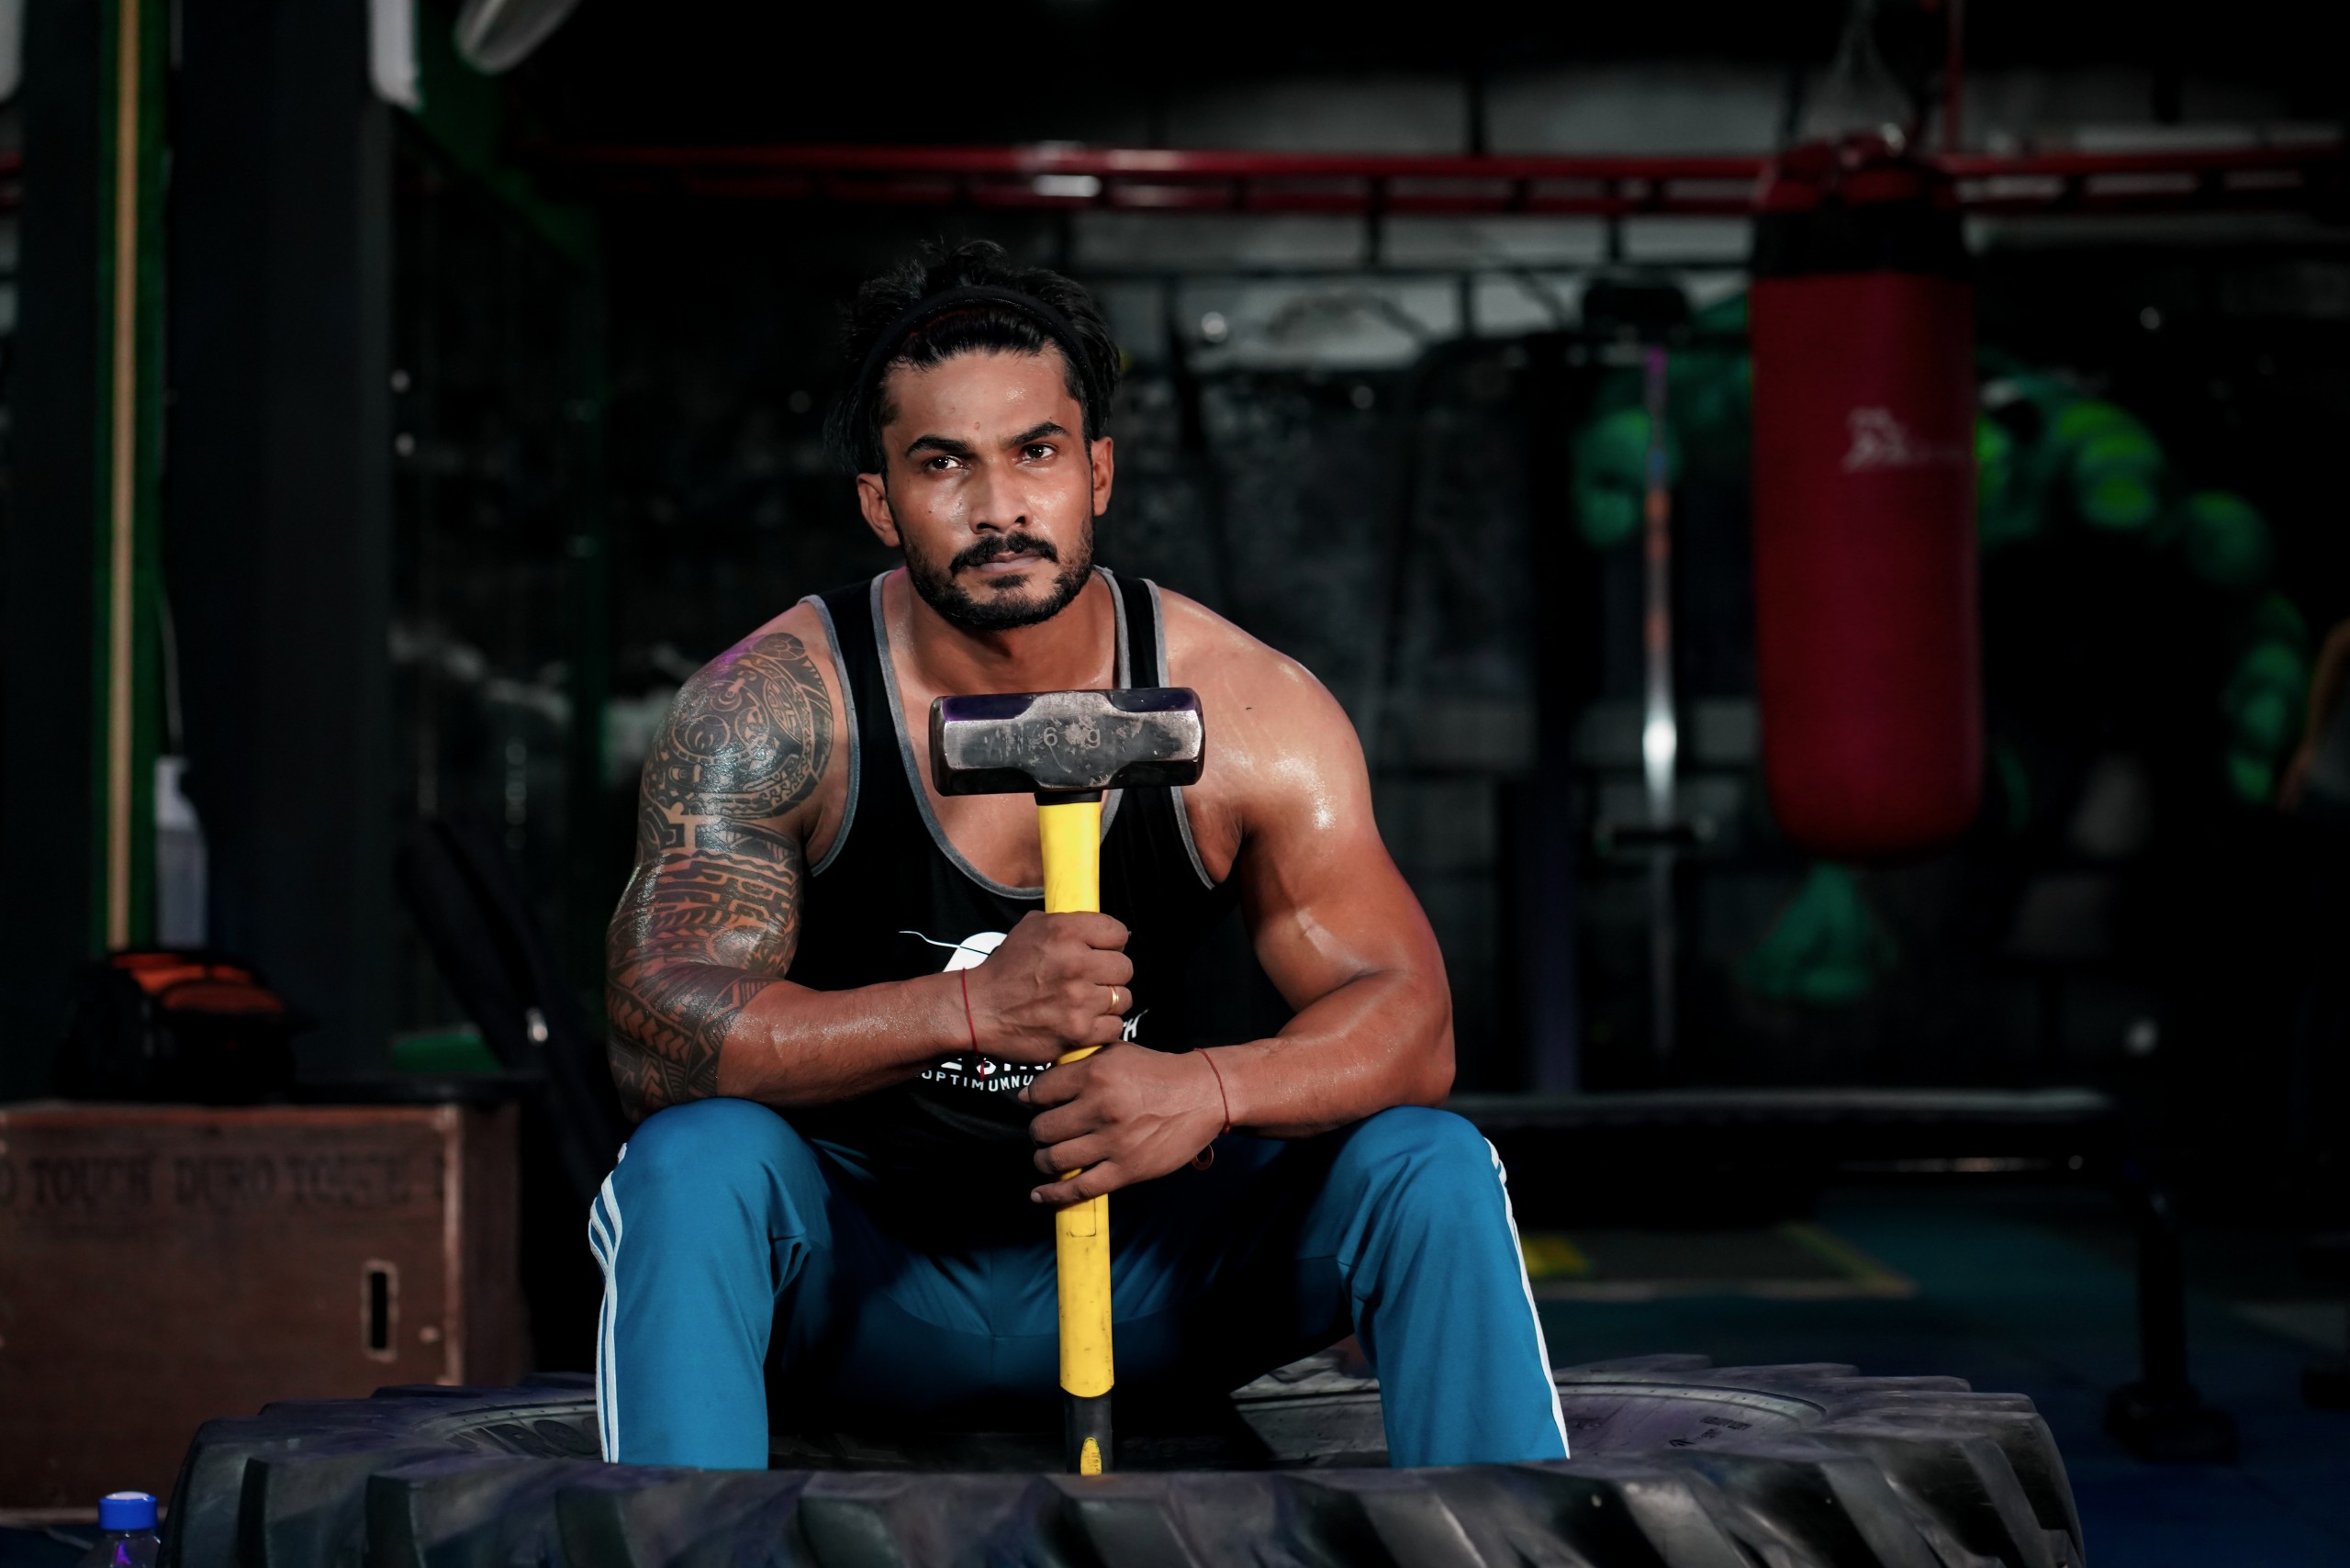 Bodybuilder holding a hammer at gym